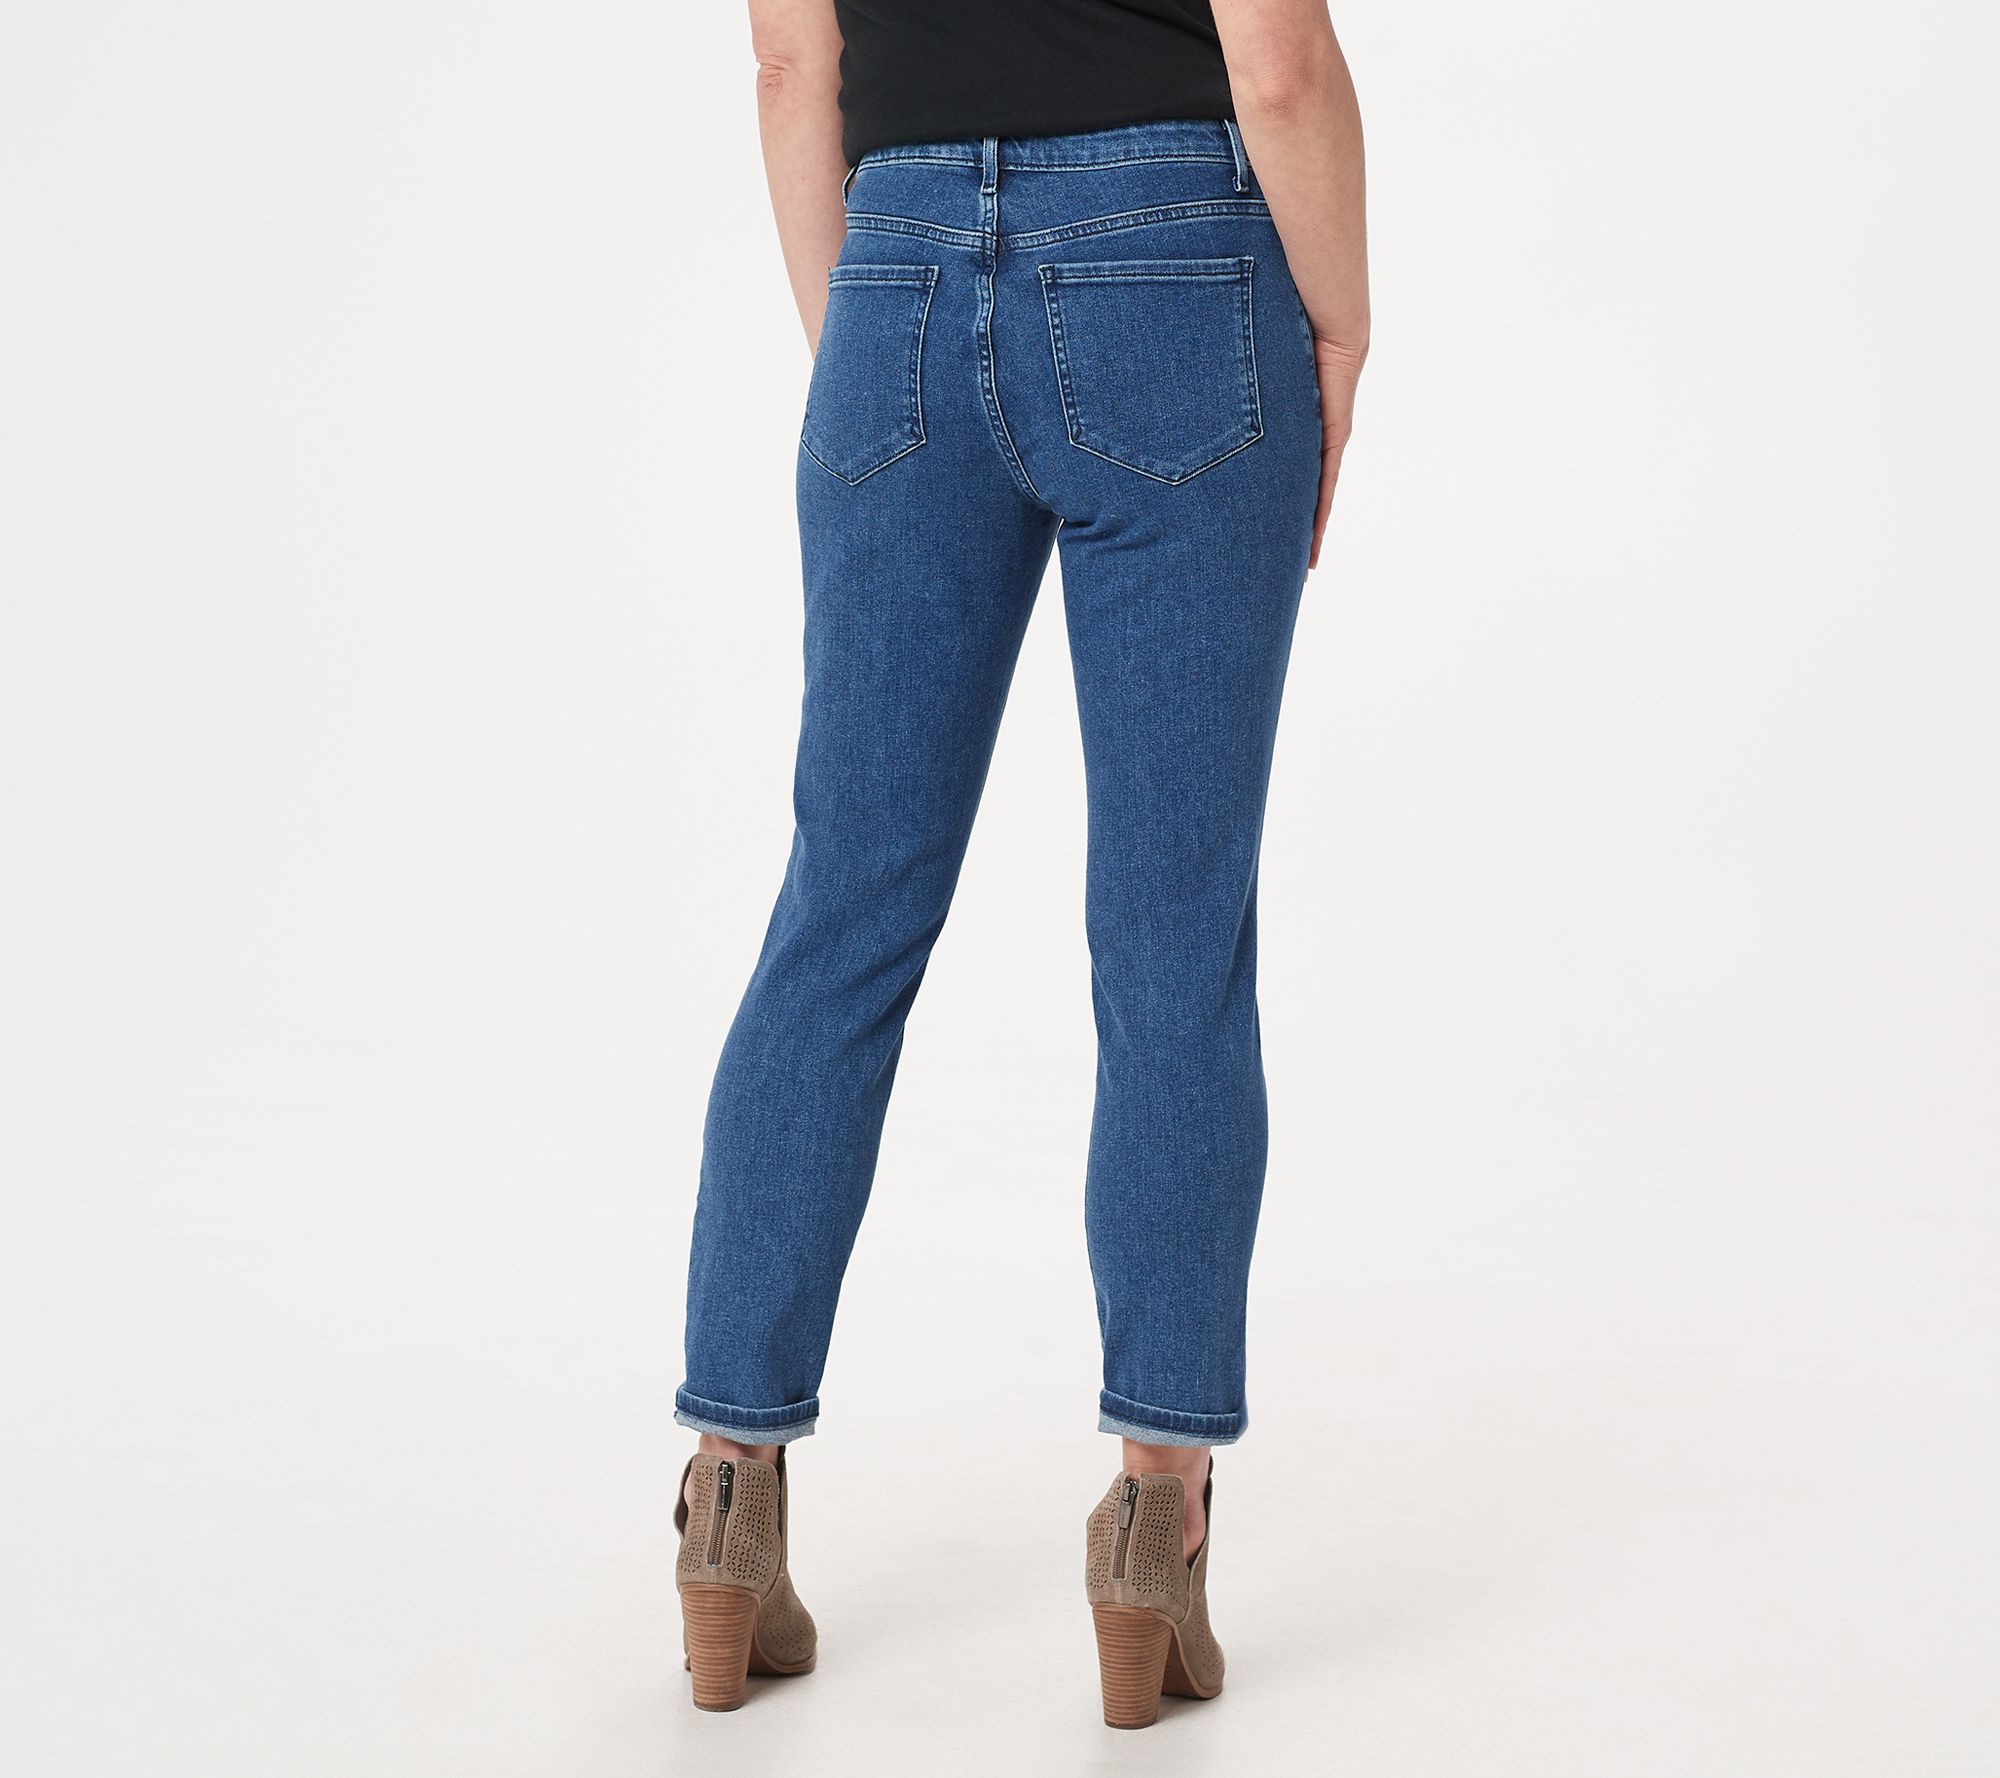 BROOKE SHIELDS Timeless Petite Ankle Jeans- Indigo - QVC.com